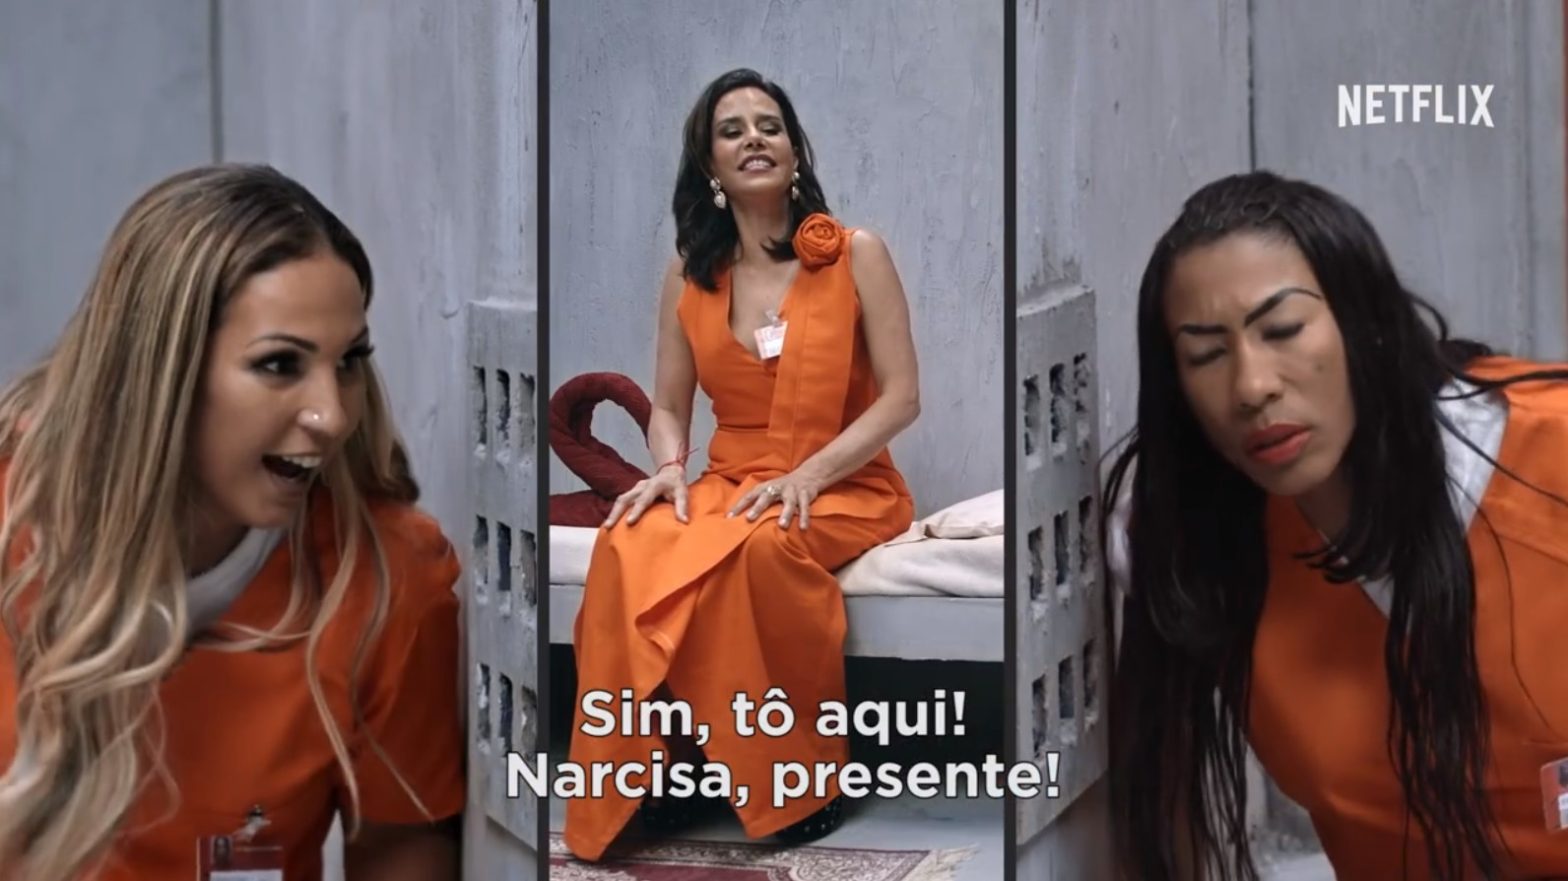 Netflix reúne Valesca Popozuda, Inês Brasil e Narcisa no novo vídeo que divulga a 5ª temporada de Orange is the New Black